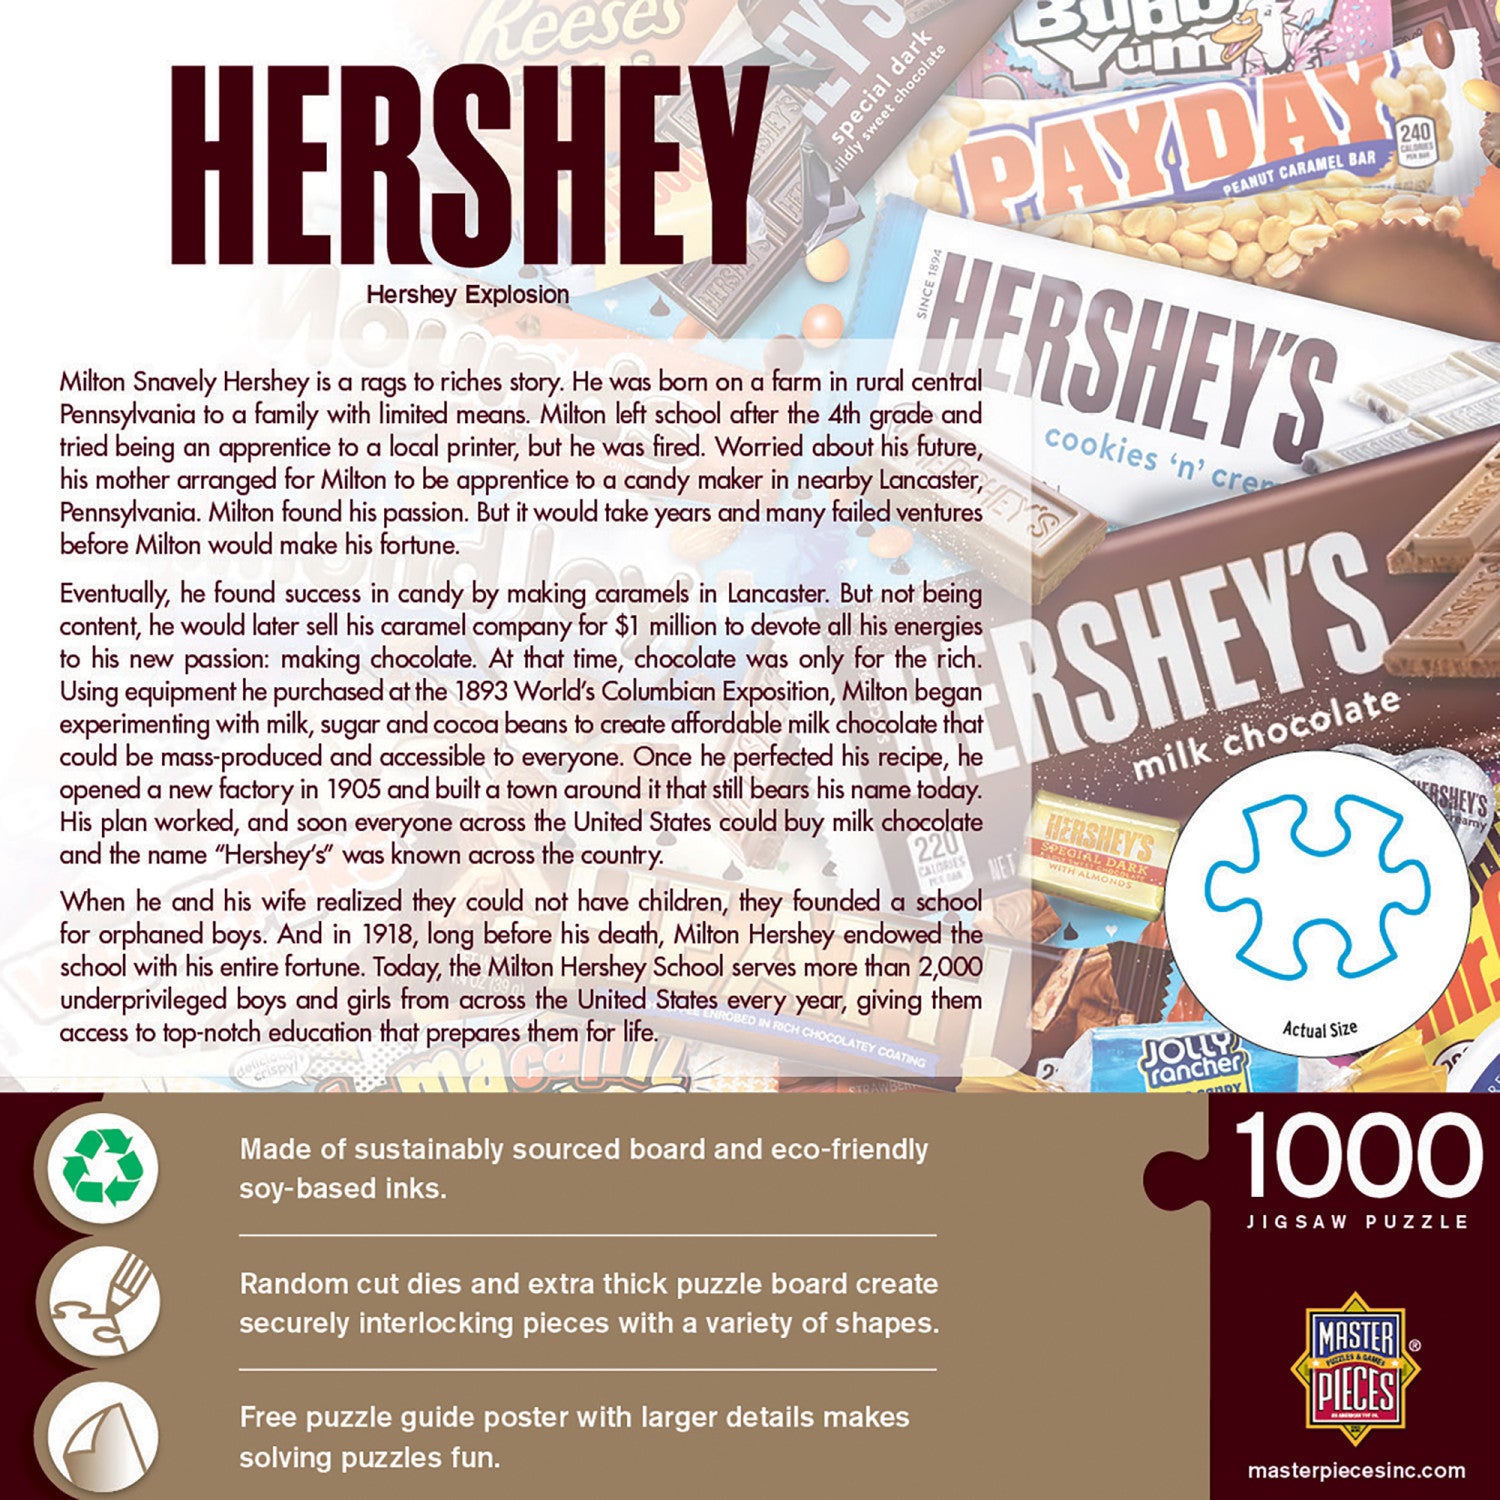 Hershey's Explosion - 1000 Piece Jigsaw Puzzle